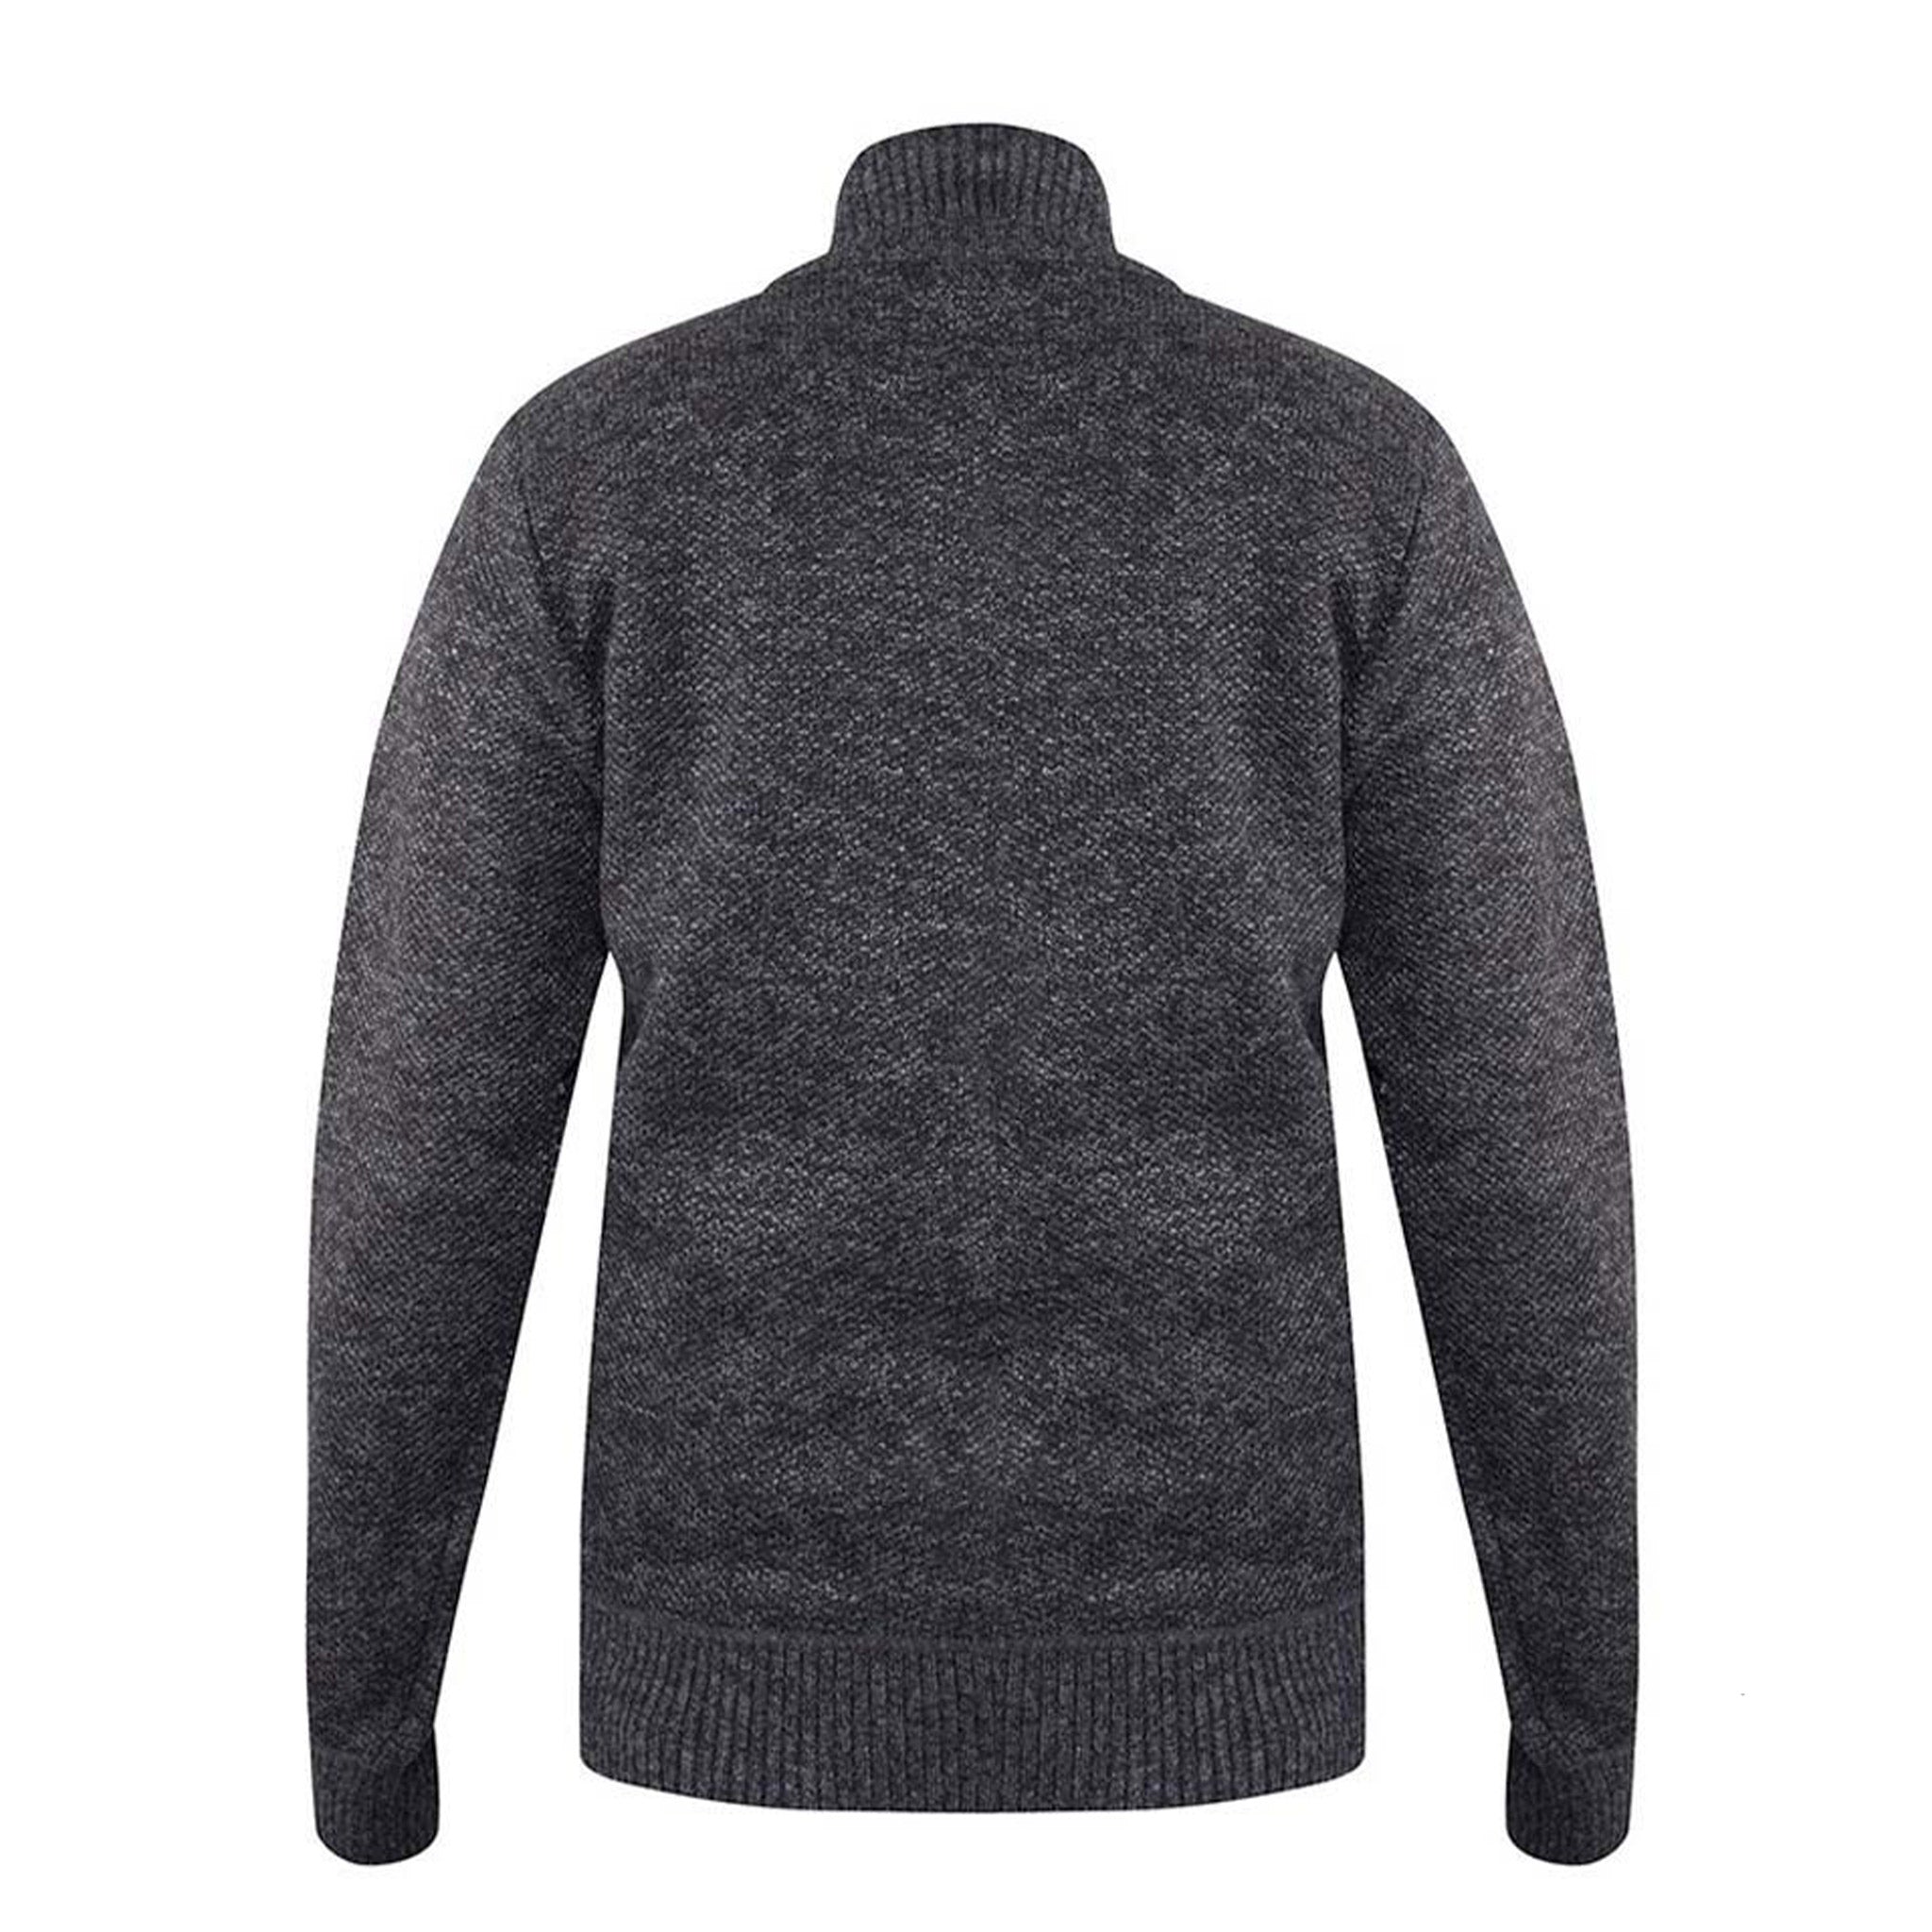 D555 Full Zip Sweater - Black Marl